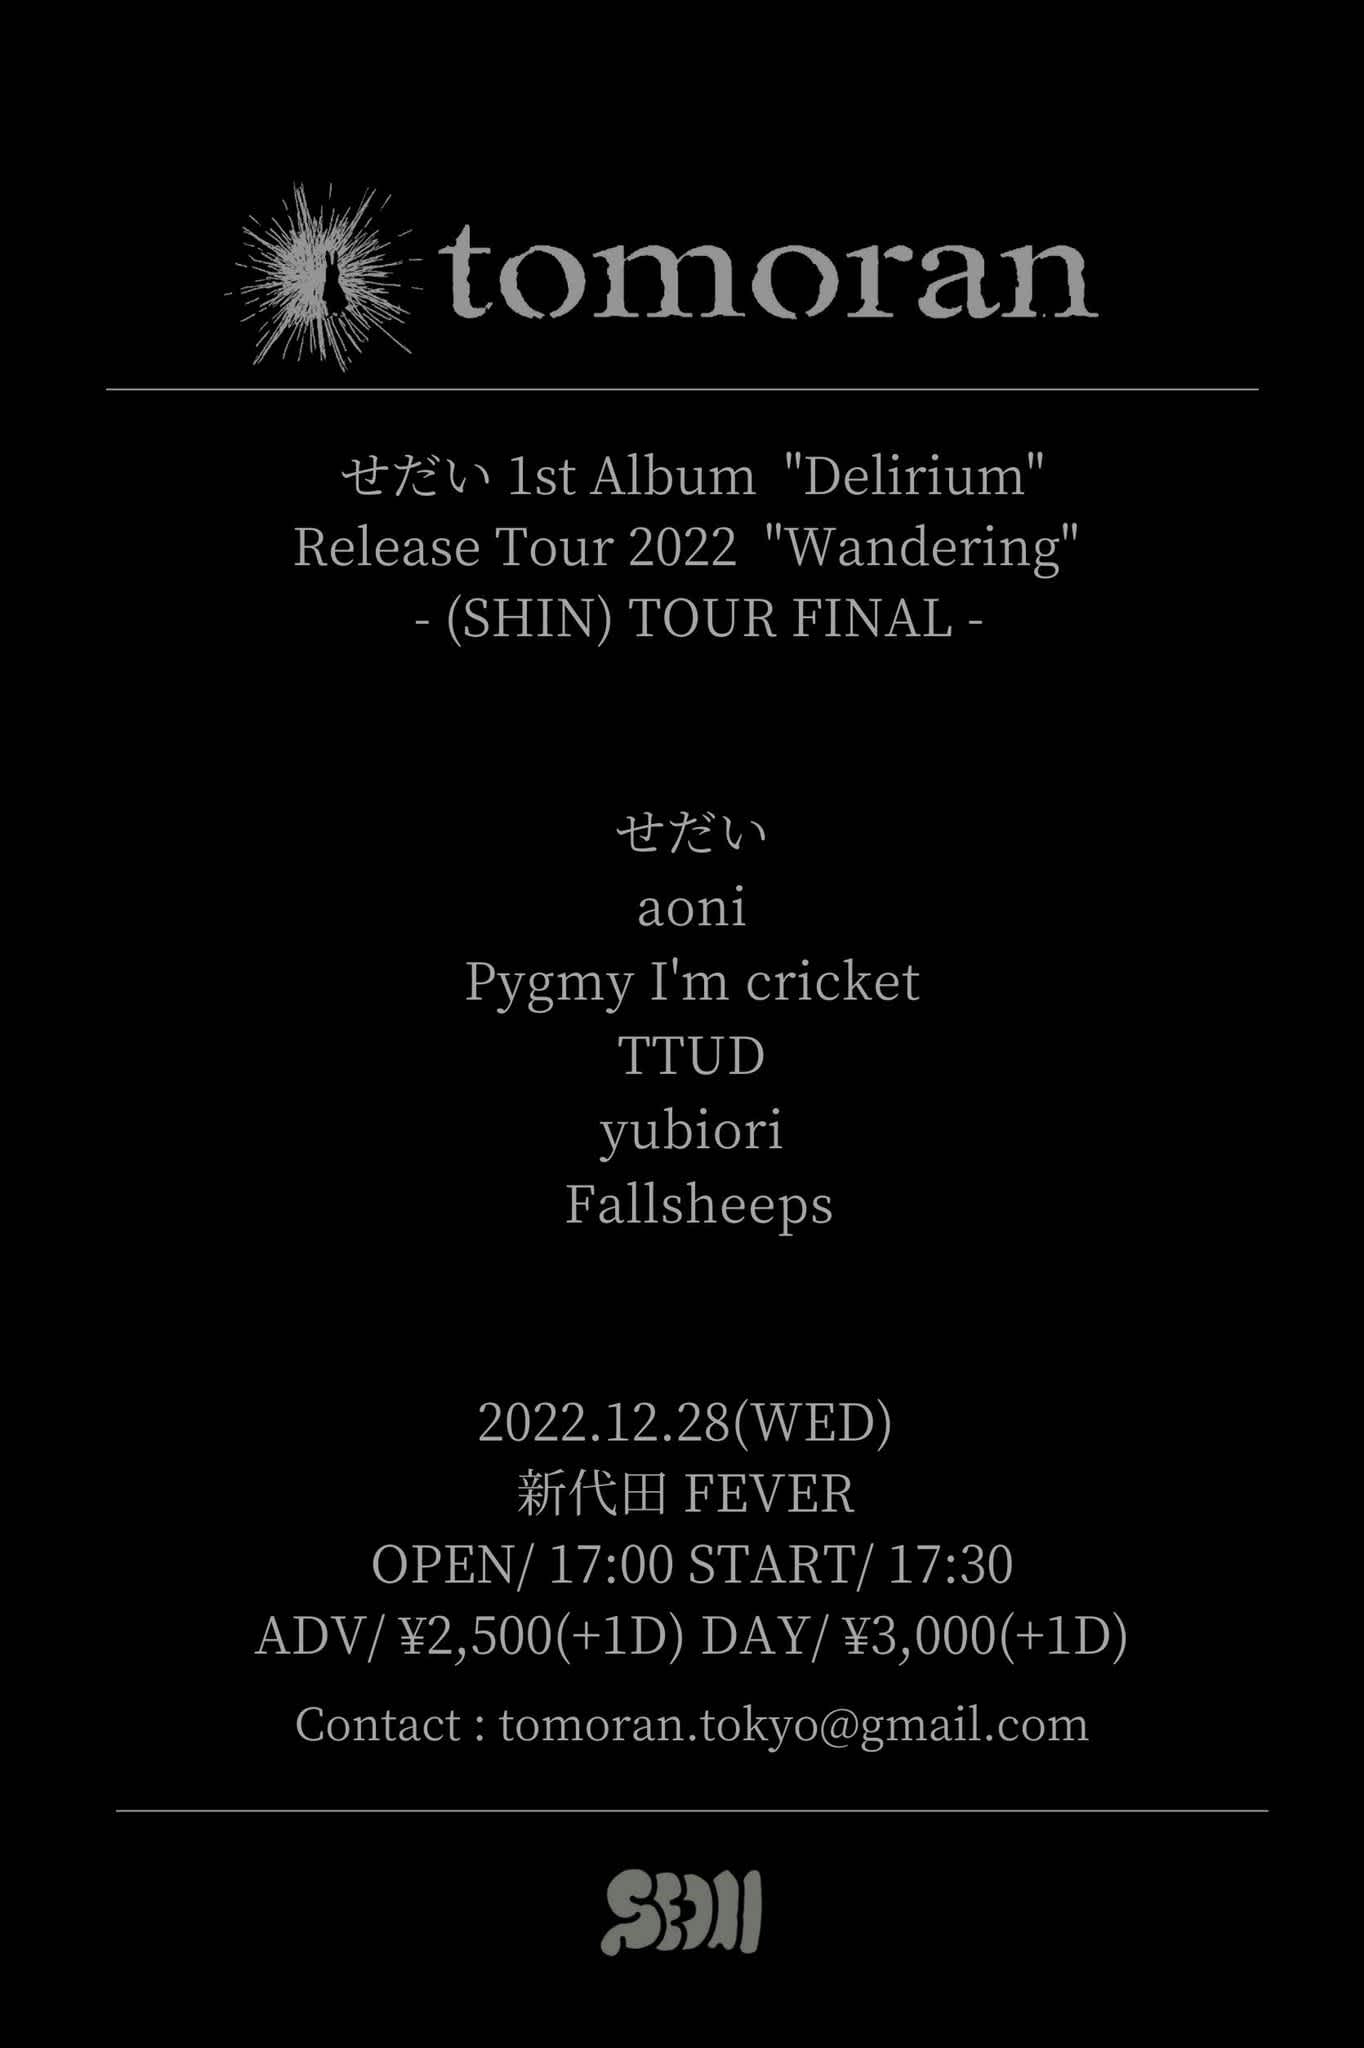 tomoran pre. せだい 1st Album “Delirium” Release Tour 2022 "Wandering” - (SHIN) Tour Final-のイメージ1